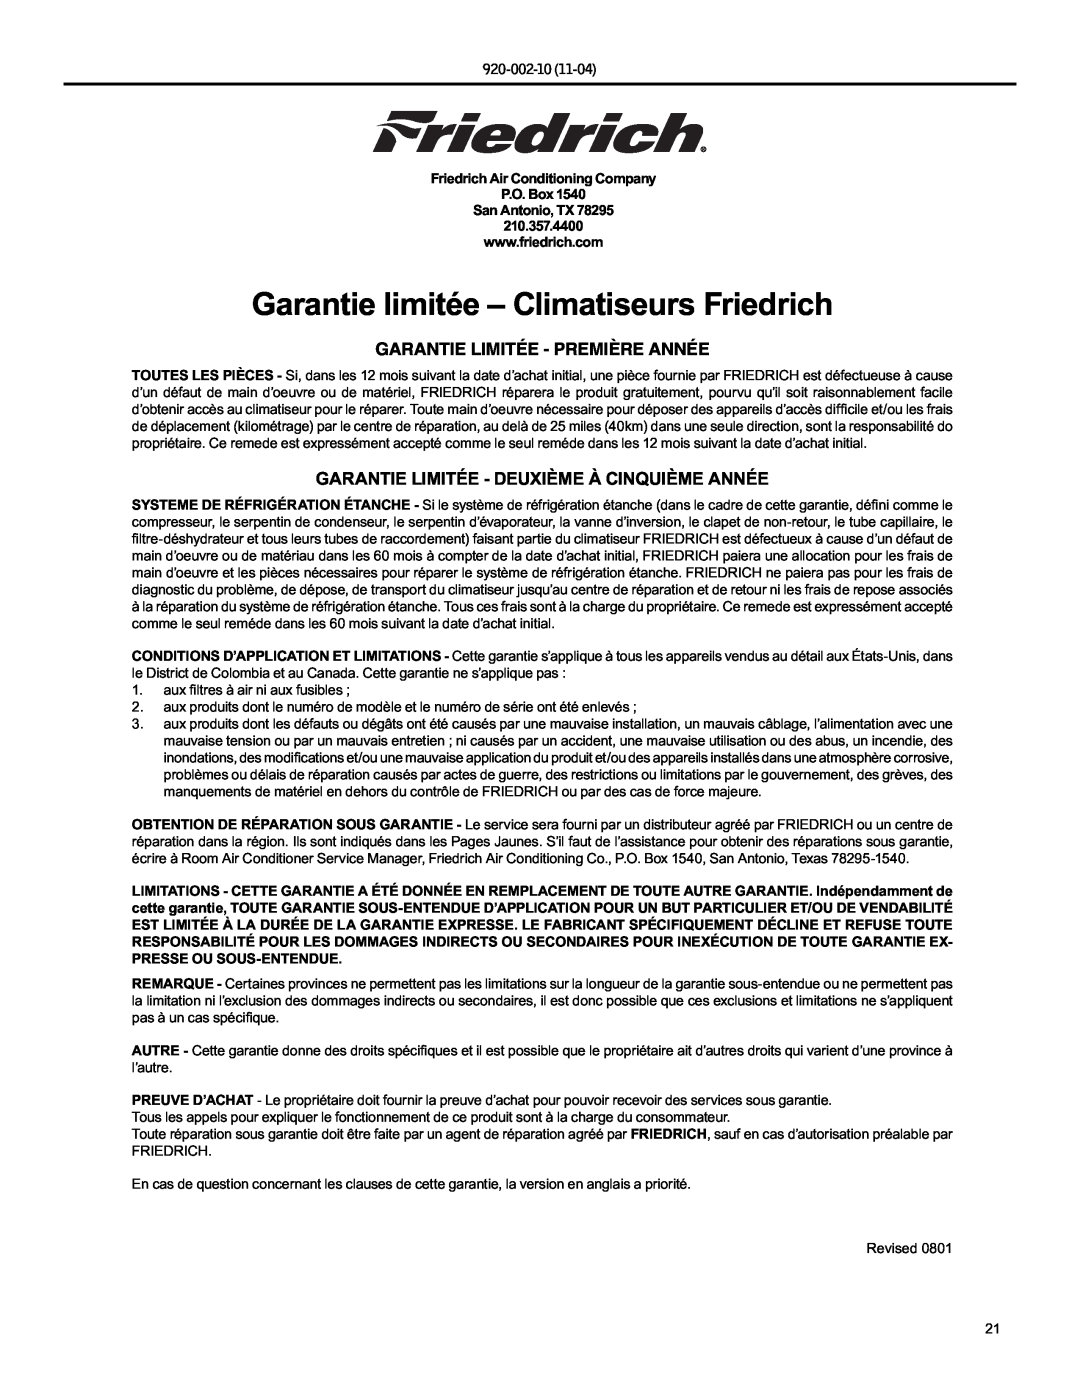 Friedrich SL36, SL25, SL28 manual Garantie limitée - Climatiseurs Friedrich, Garantie Limitée - Première Année, 920-002-10 